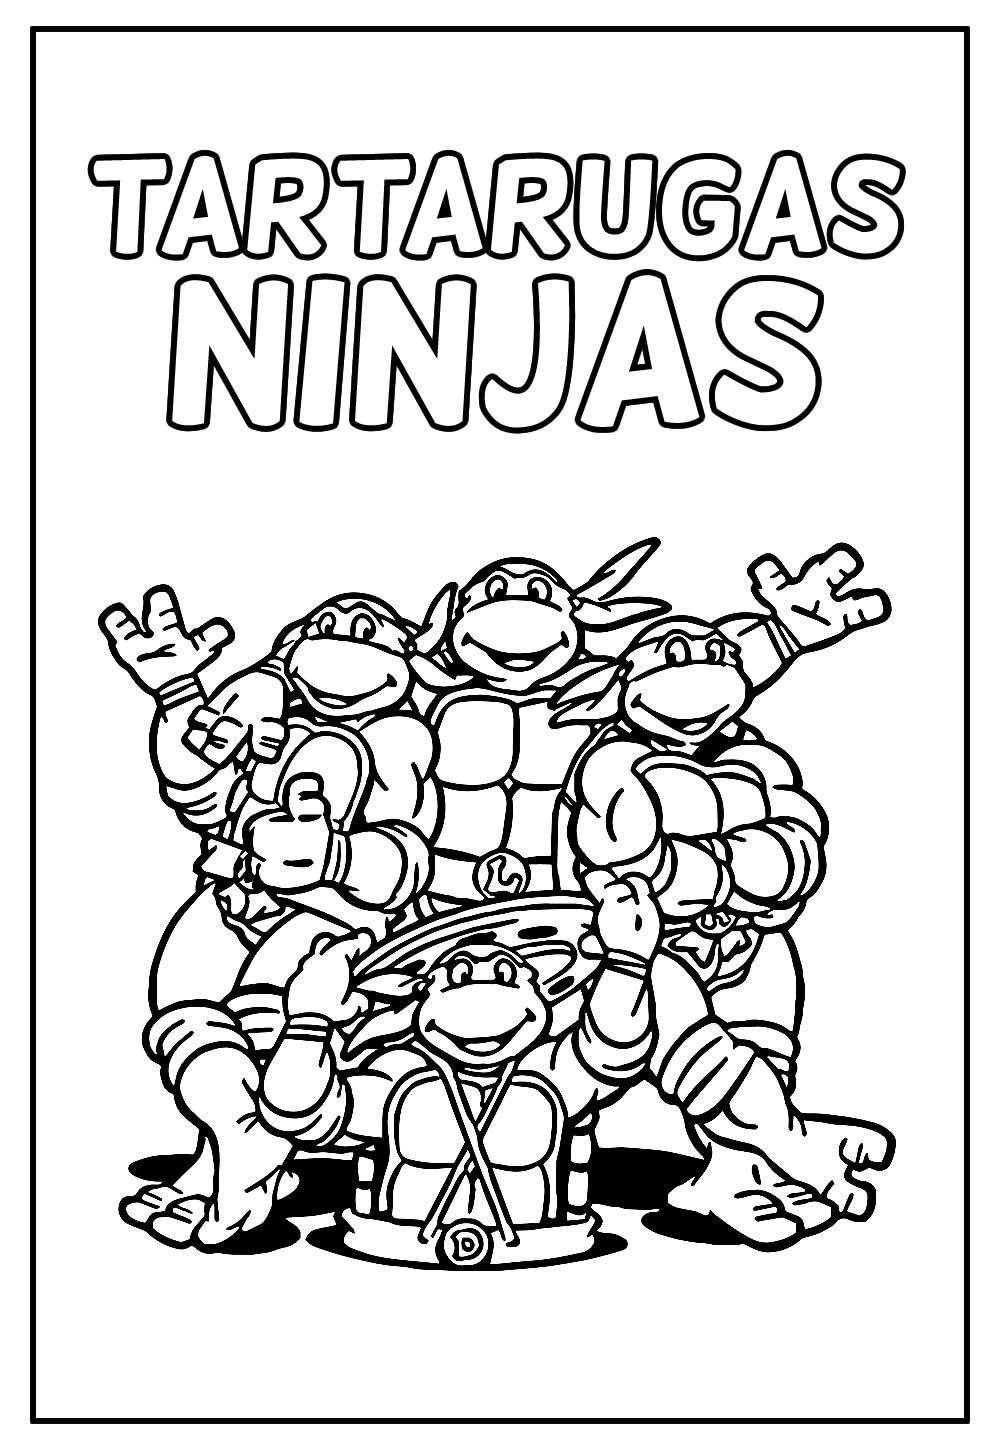 Desenho das Tartarugas Ninjas para imprimir e colorir